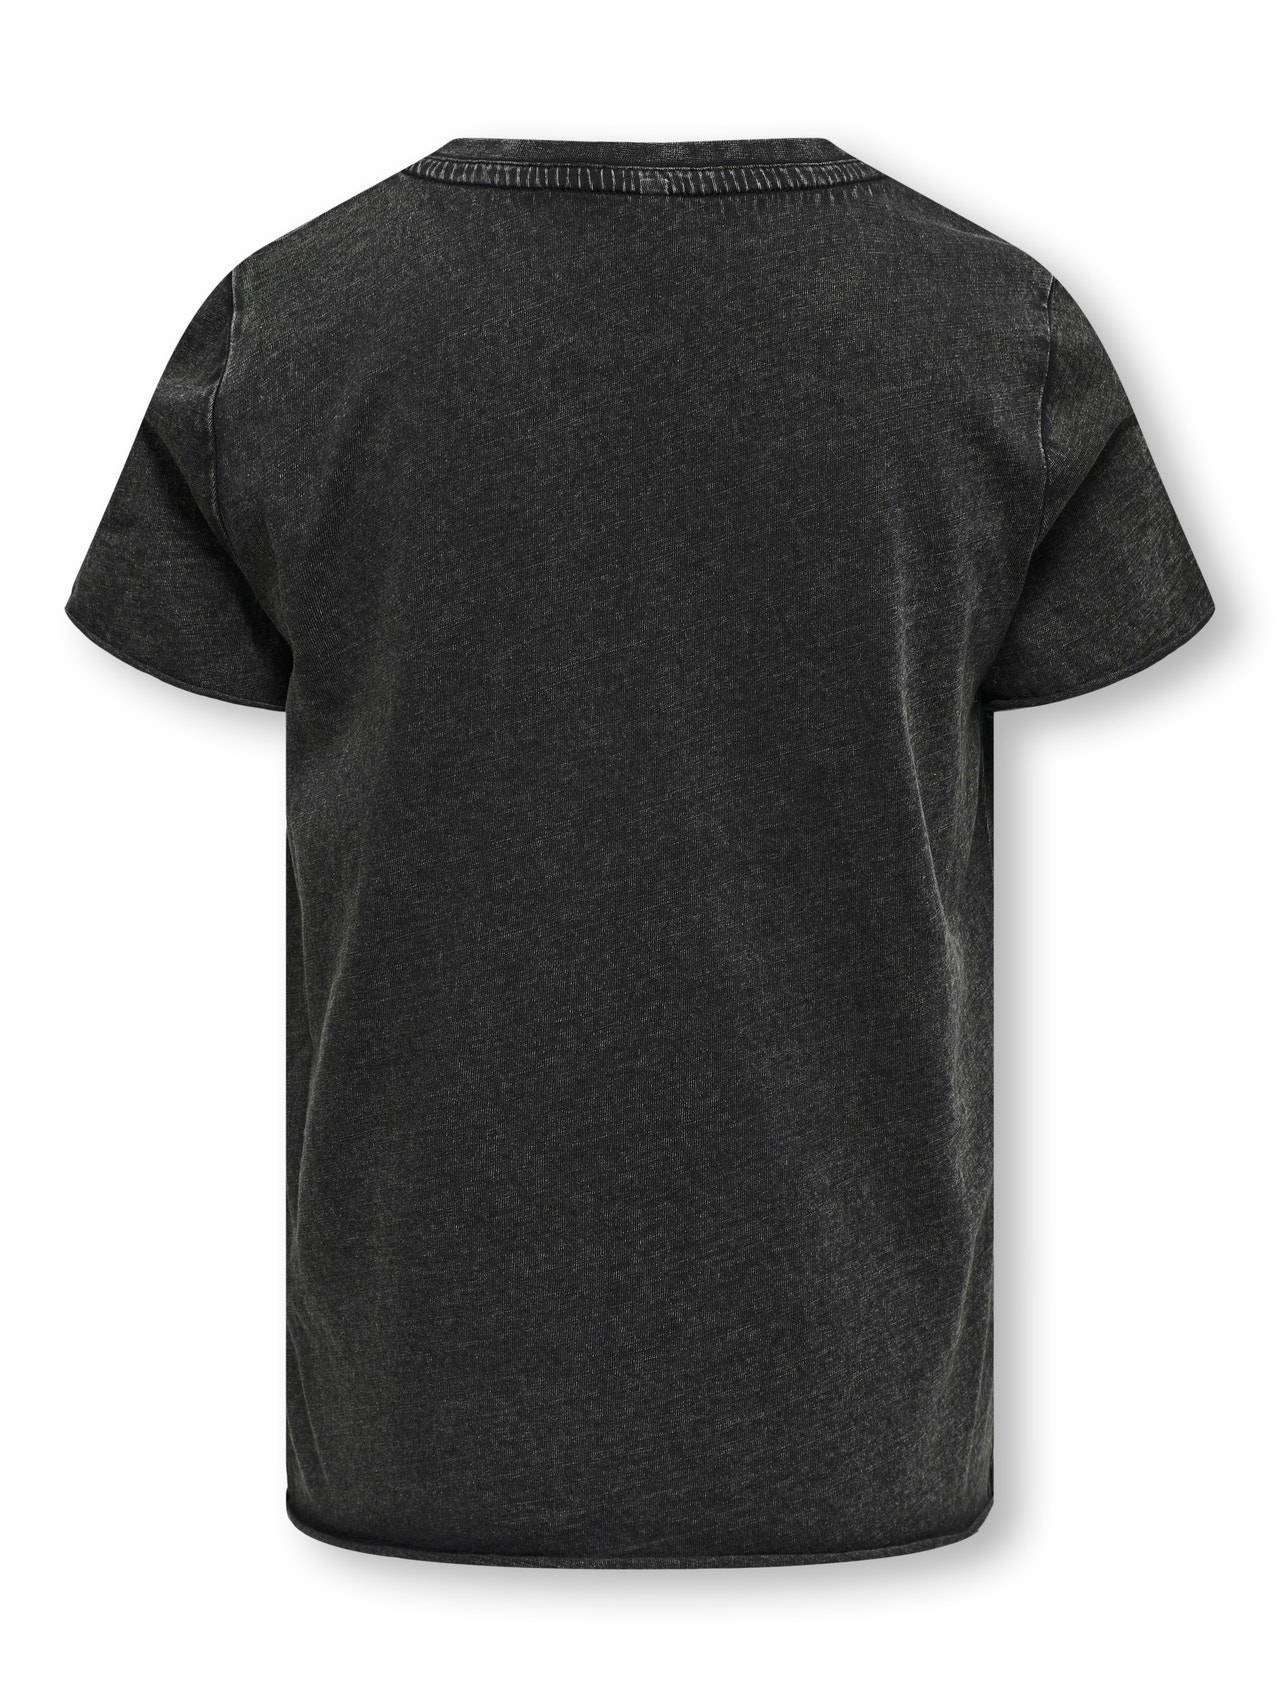 ONLY O-neck t-shirt -Black - 15312802